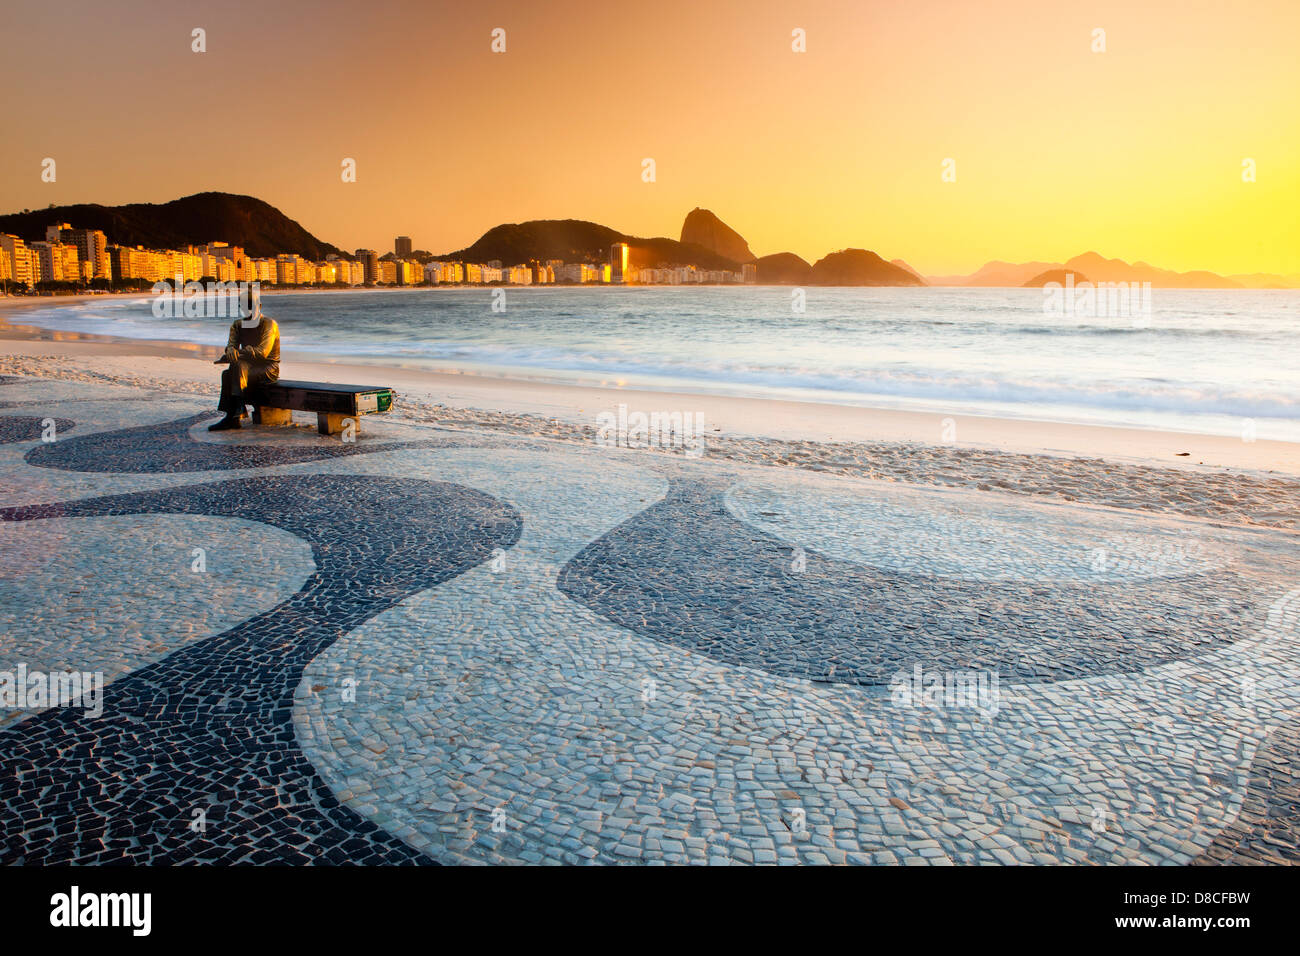 Brazilian poet Carlos Drummond de Andrade statue at Copacabana beach sidewalk, Rio de Janeiro, Brazil. Stock Photo